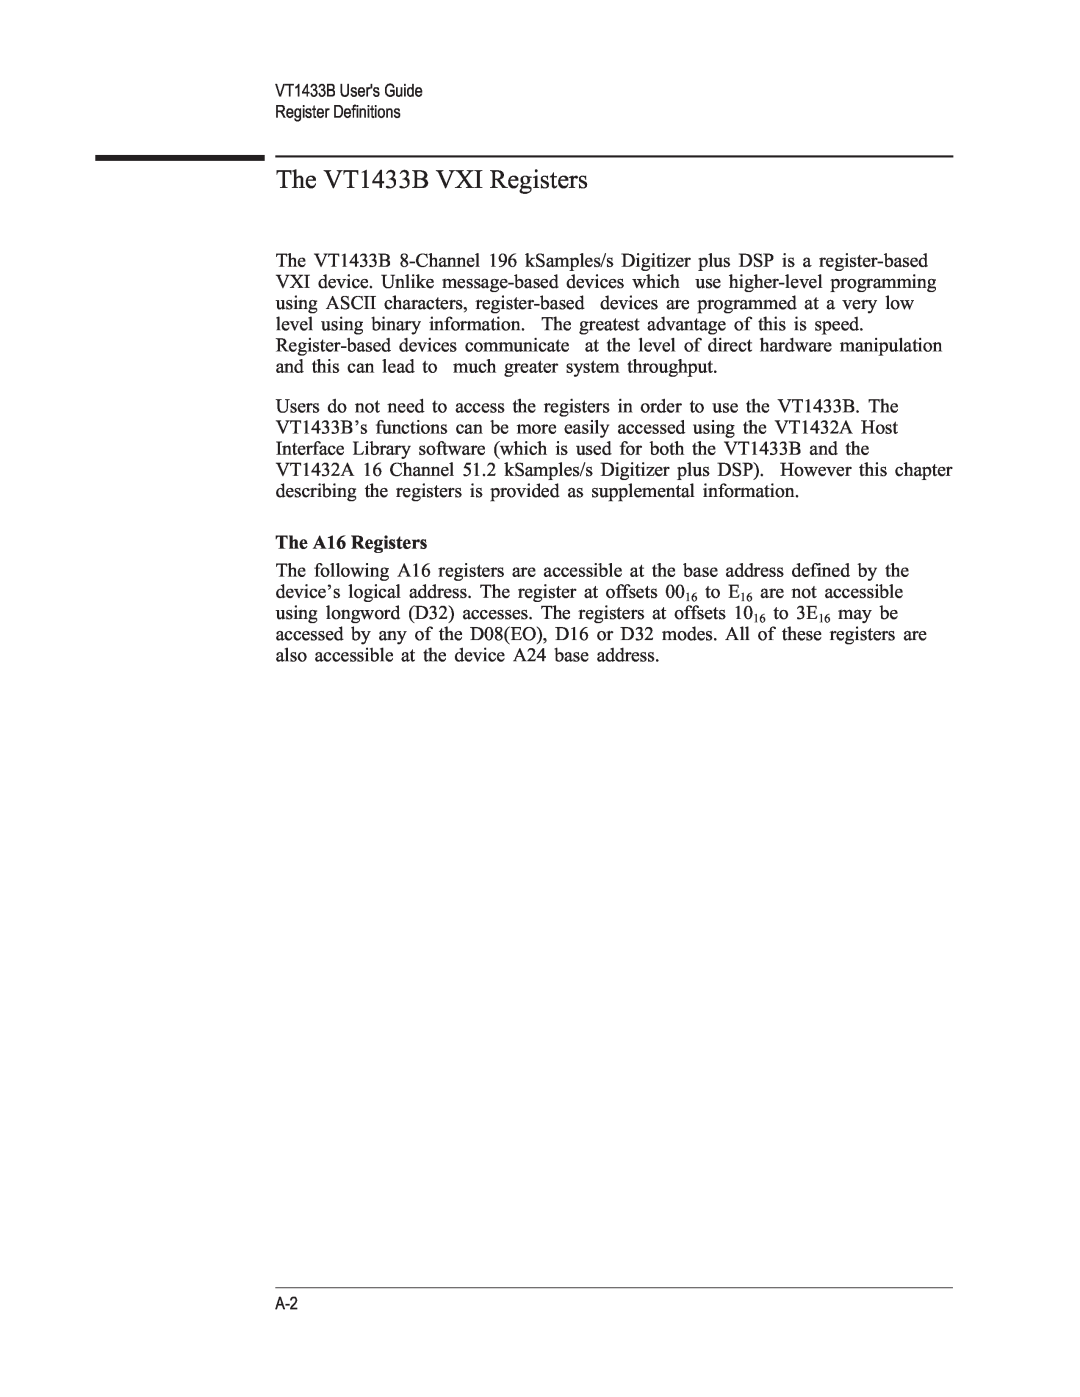 VXI manual The VT1433B VXI Registers, The A16 Registers 